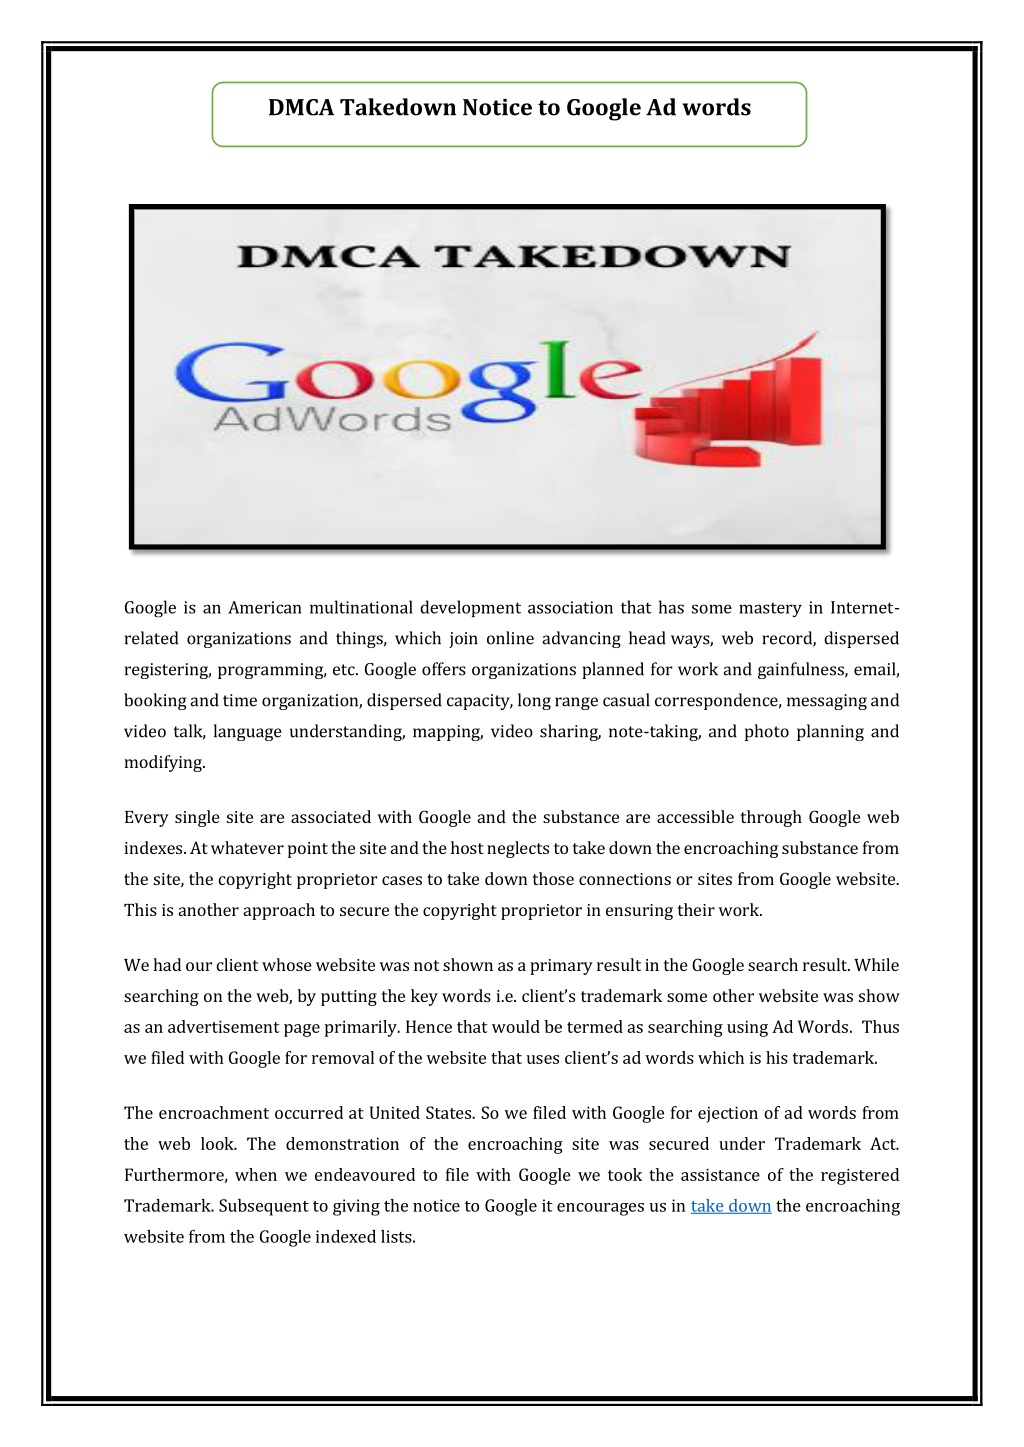 Google Bans 'Downloader' Again Following Markscan DMCA Notice